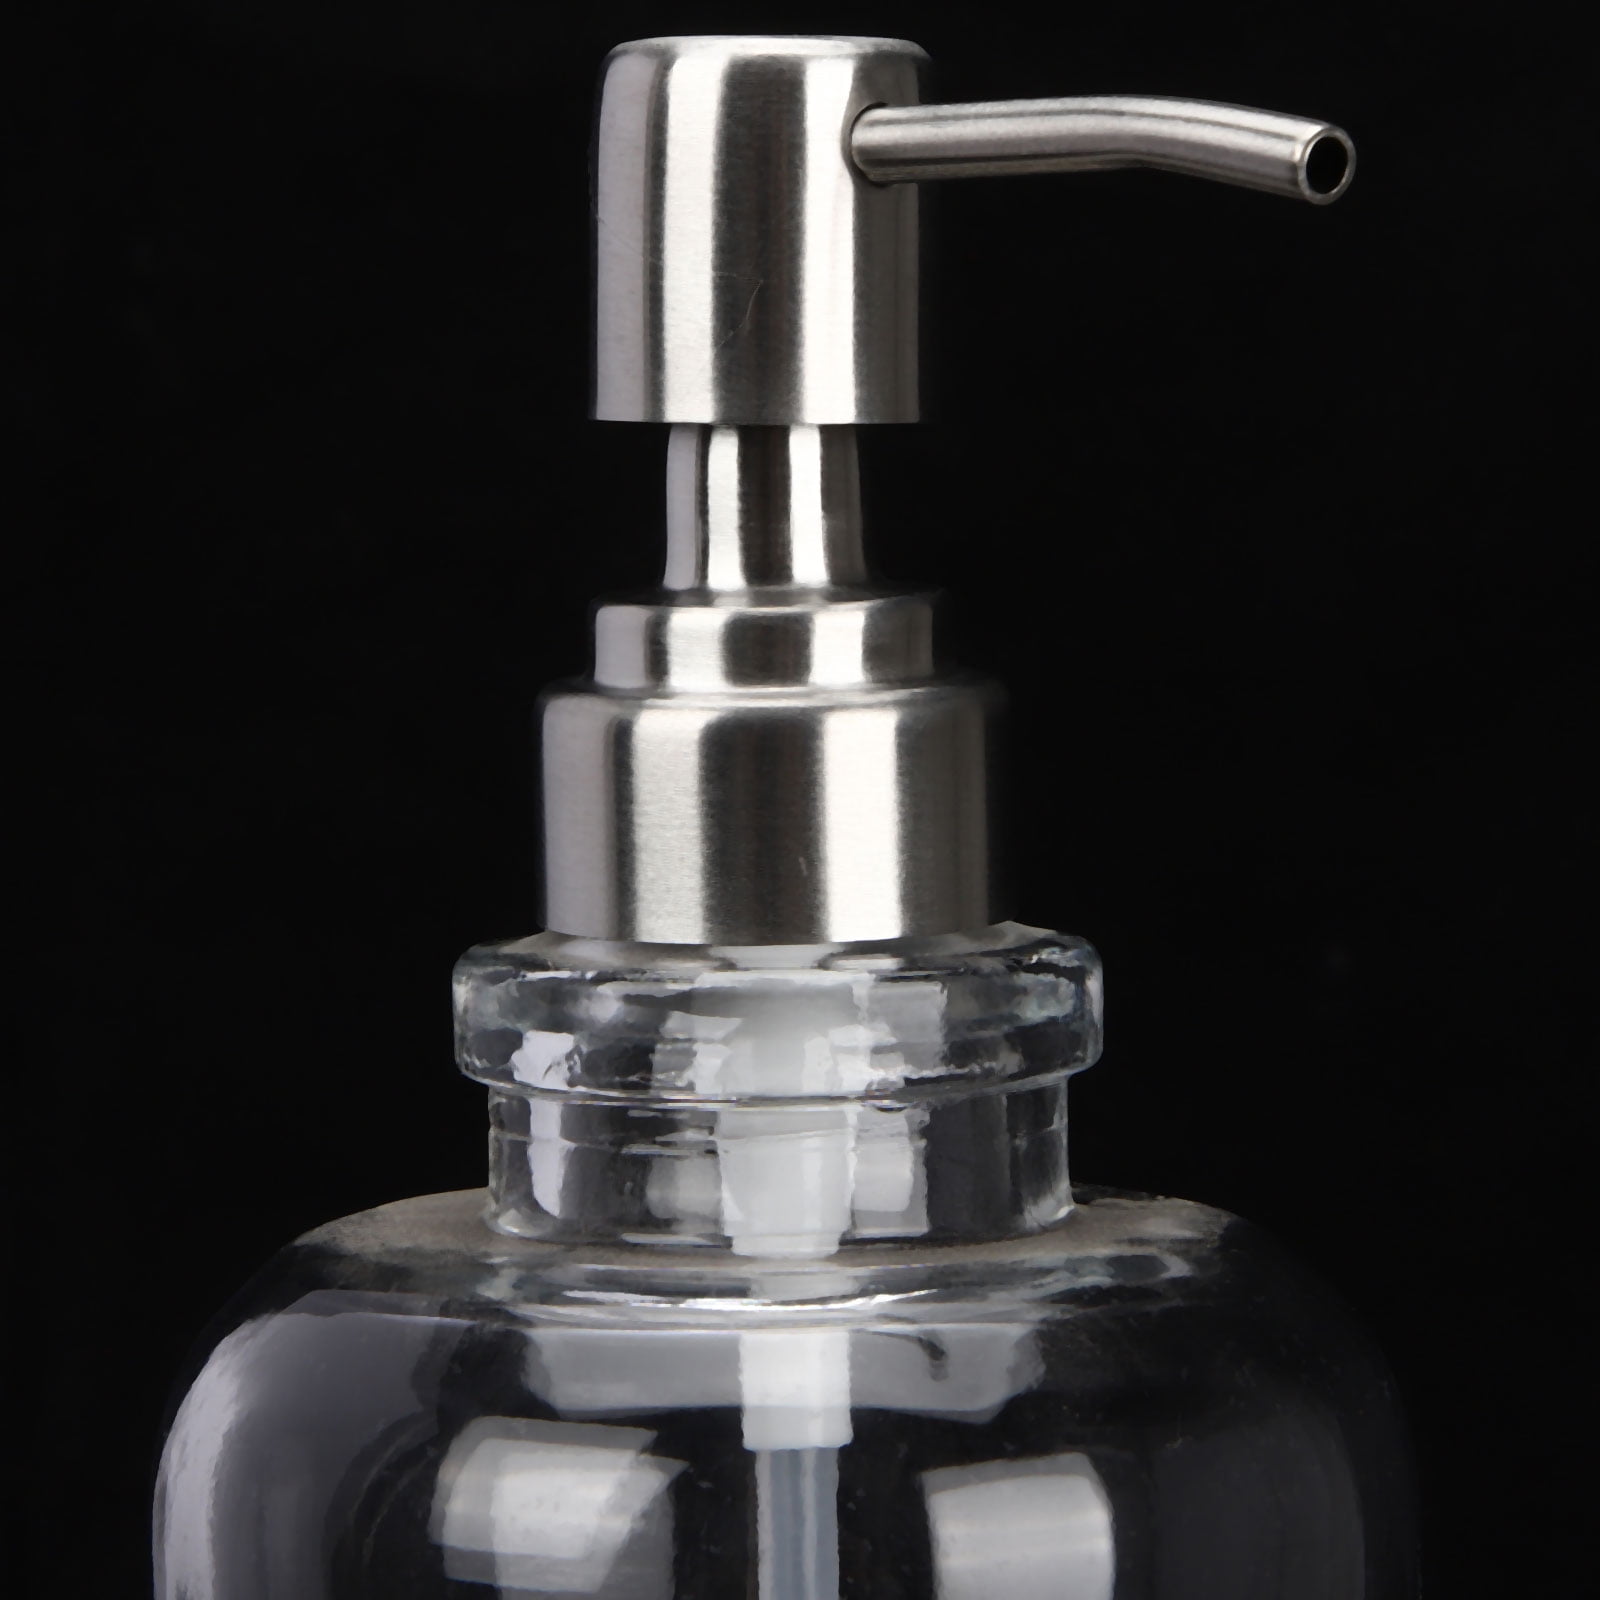 Dish Soap Dispenser for Kitchen Countertop - Liquid Hand Soap Dispenser for  Bathroom - Perfect for Lotion, Oils, Mouthwash - Waterproof Chalk Labels